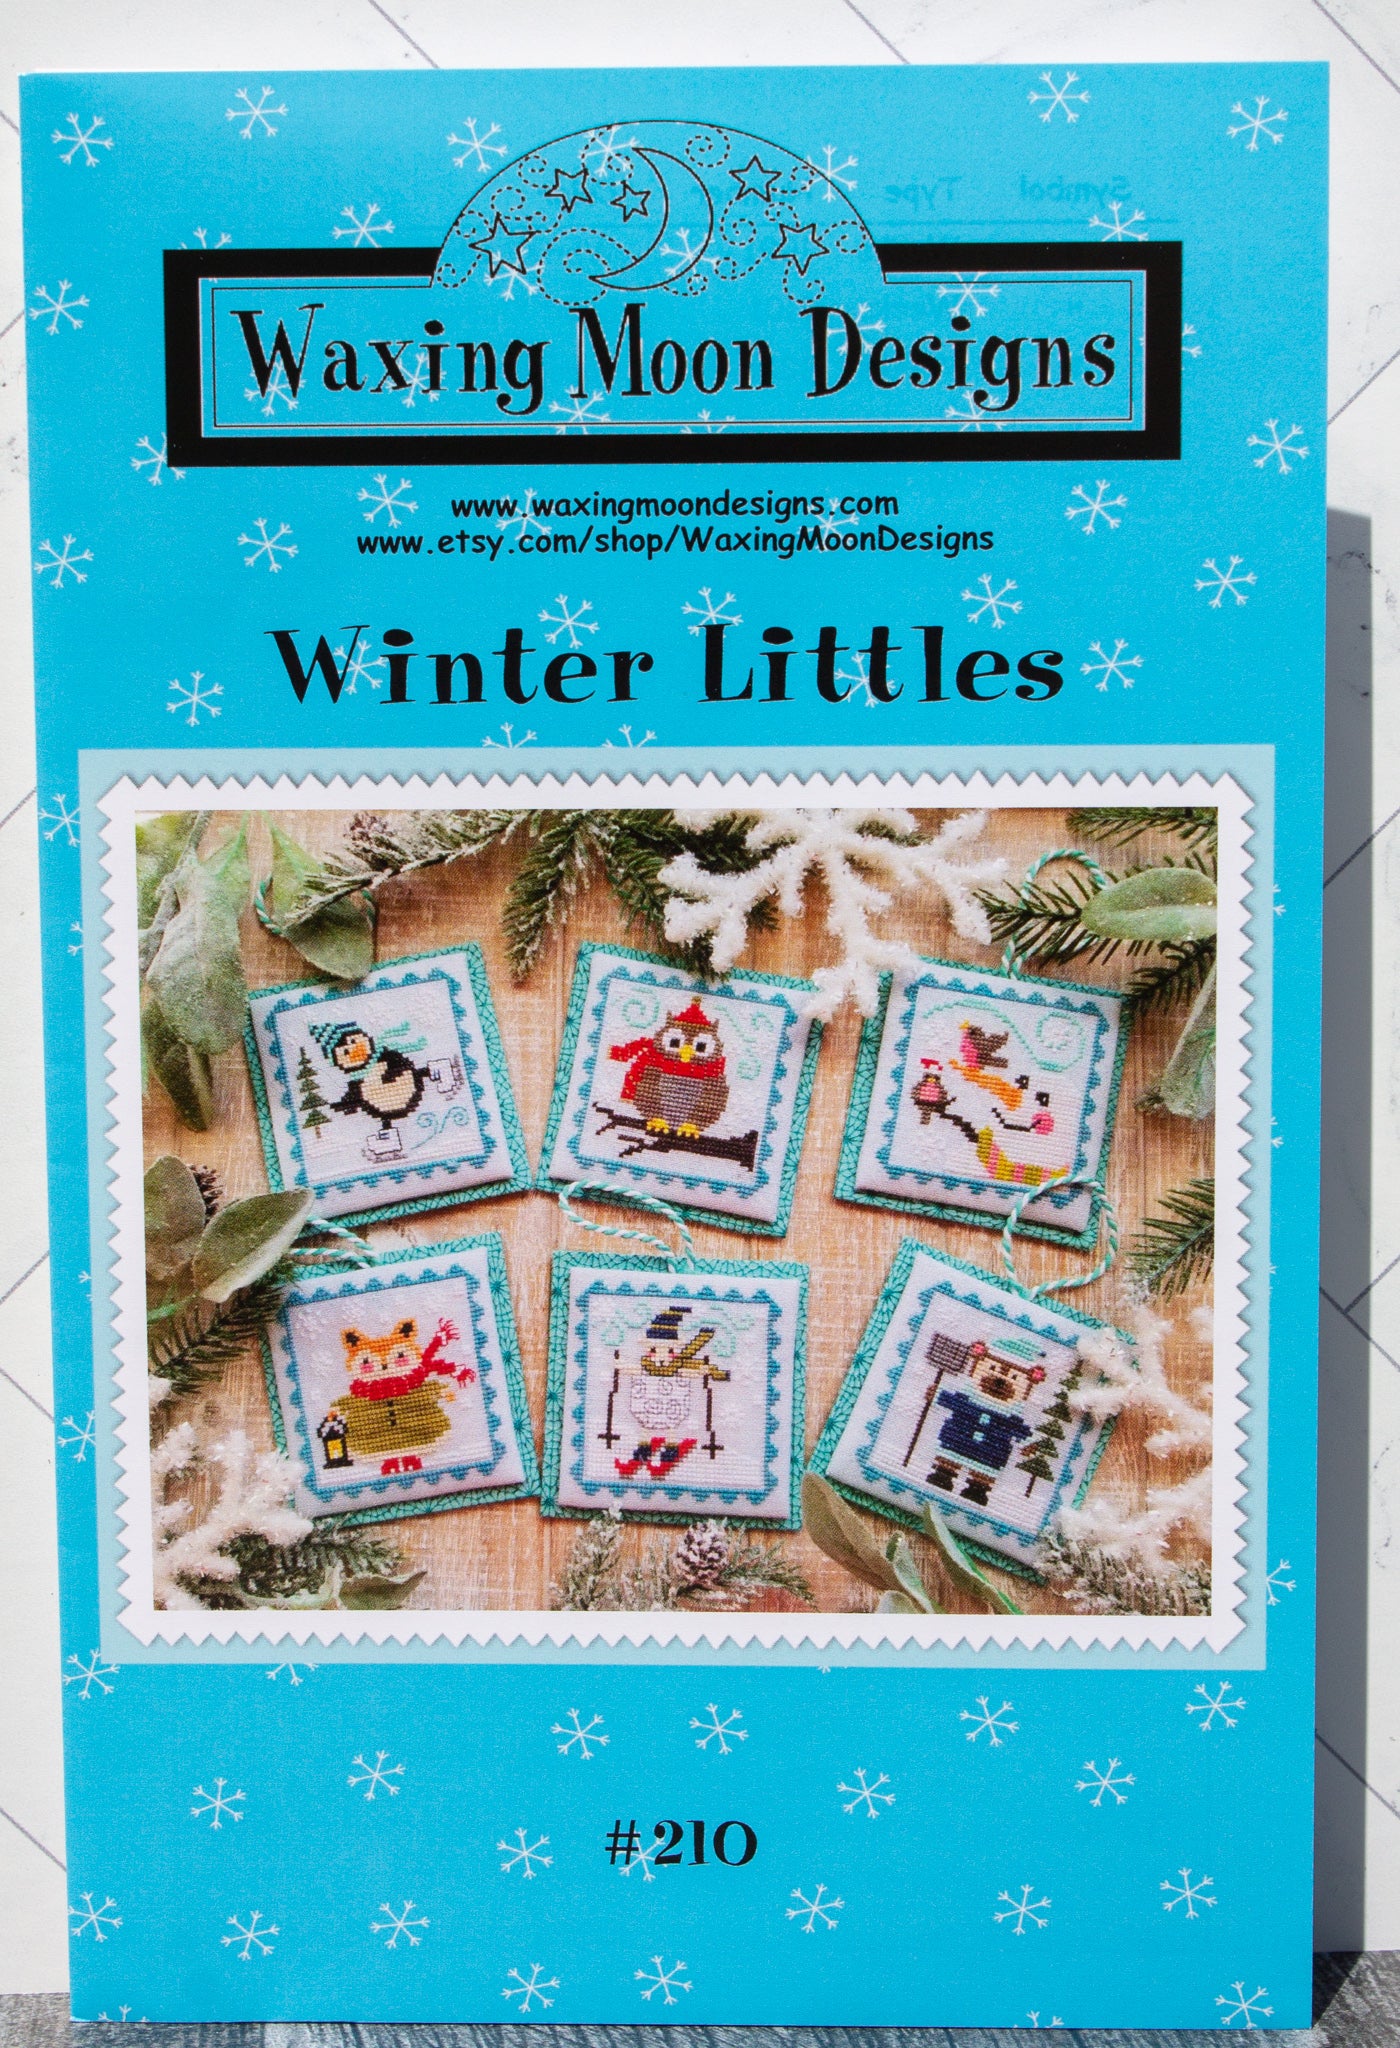 Winter Littles by Waxing Moon Designs